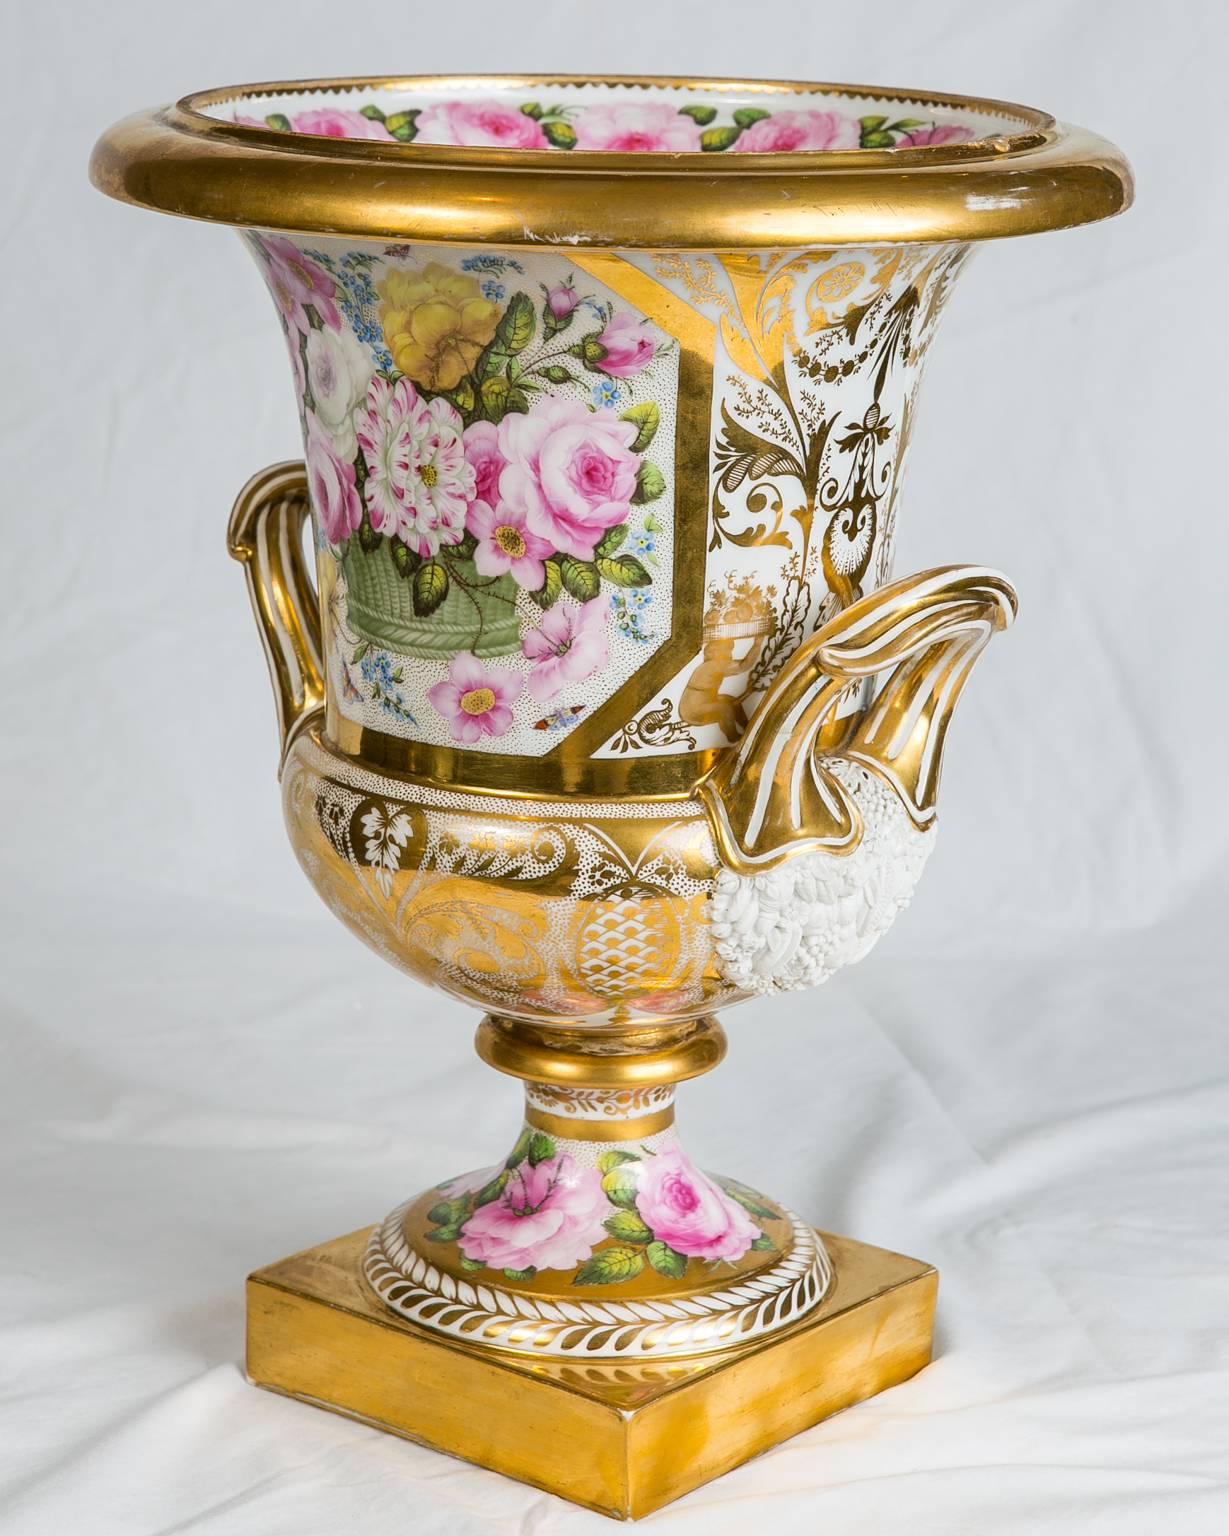 British Antique Spode Porcelain Urn Made in England circa 1810 For Sale